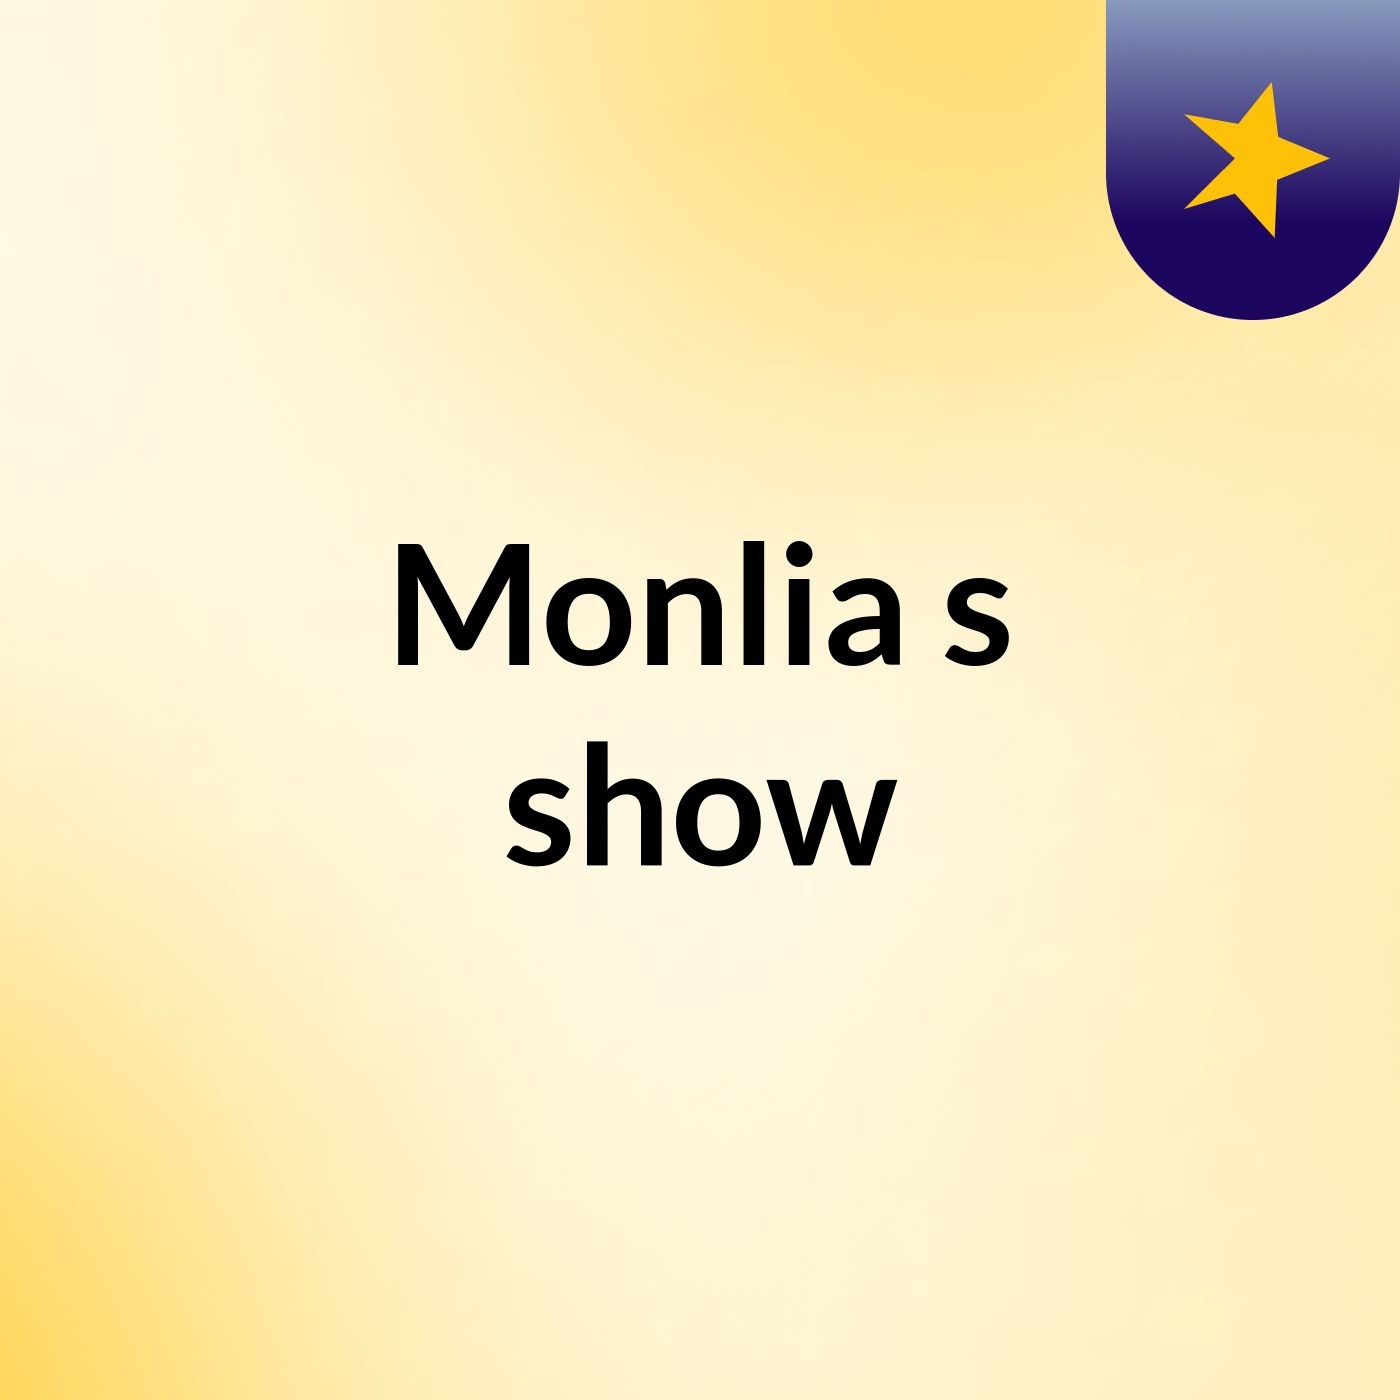 Monlia's show